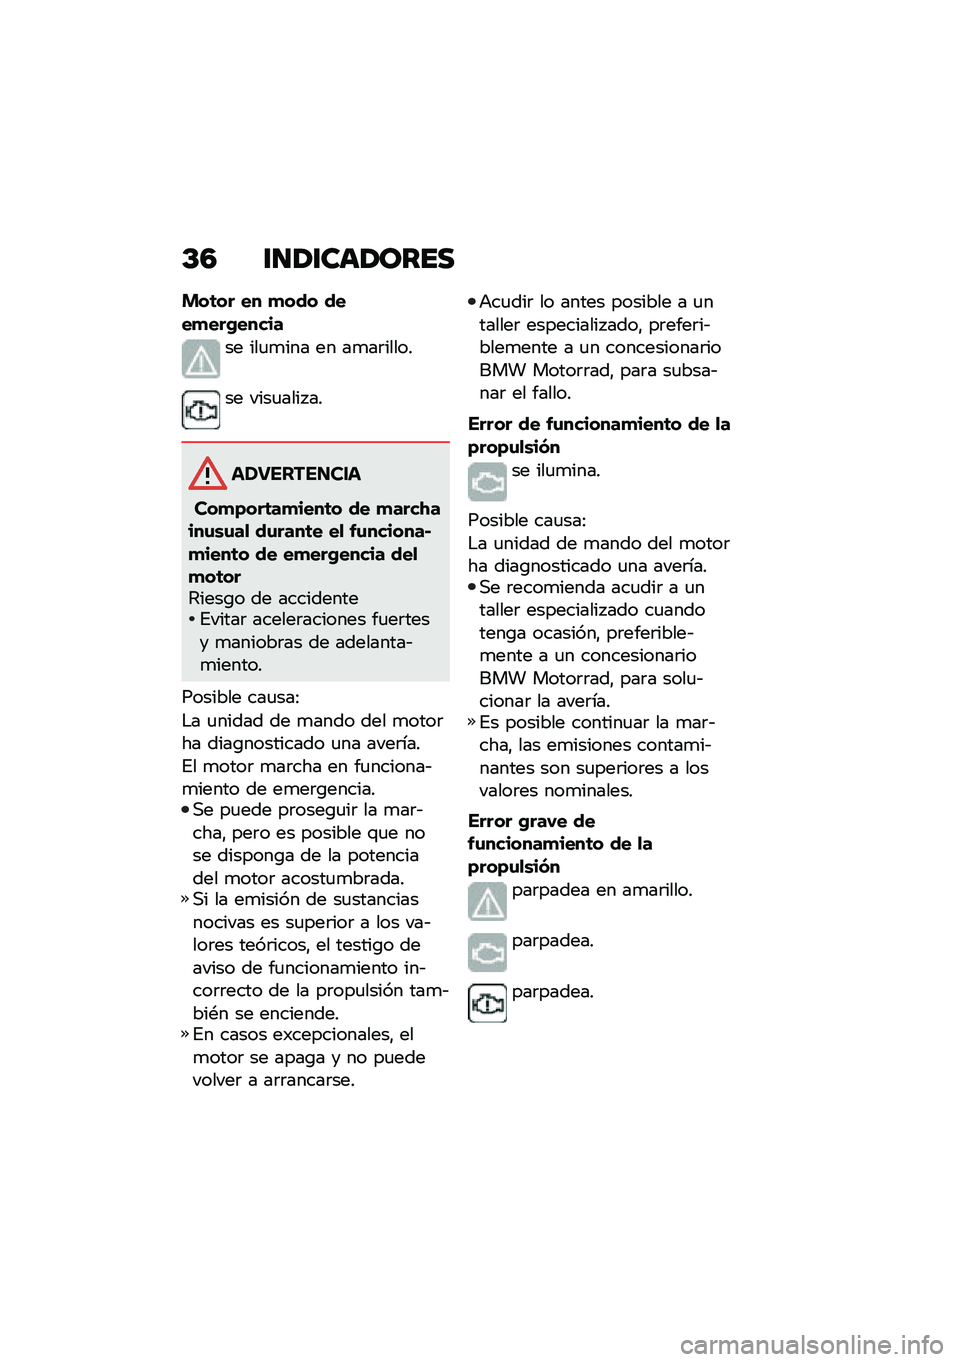 BMW MOTORRAD C 400 X 2020  Manual de instrucciones (in Spanish) �D�3 �\f�
�/�\f���/����
� ��	�� �� �
��� ����
���+�����
�� ���
�
��� �� ��
��	�����
�� ����
���� ��
�����������
���
�)���	��
����	�